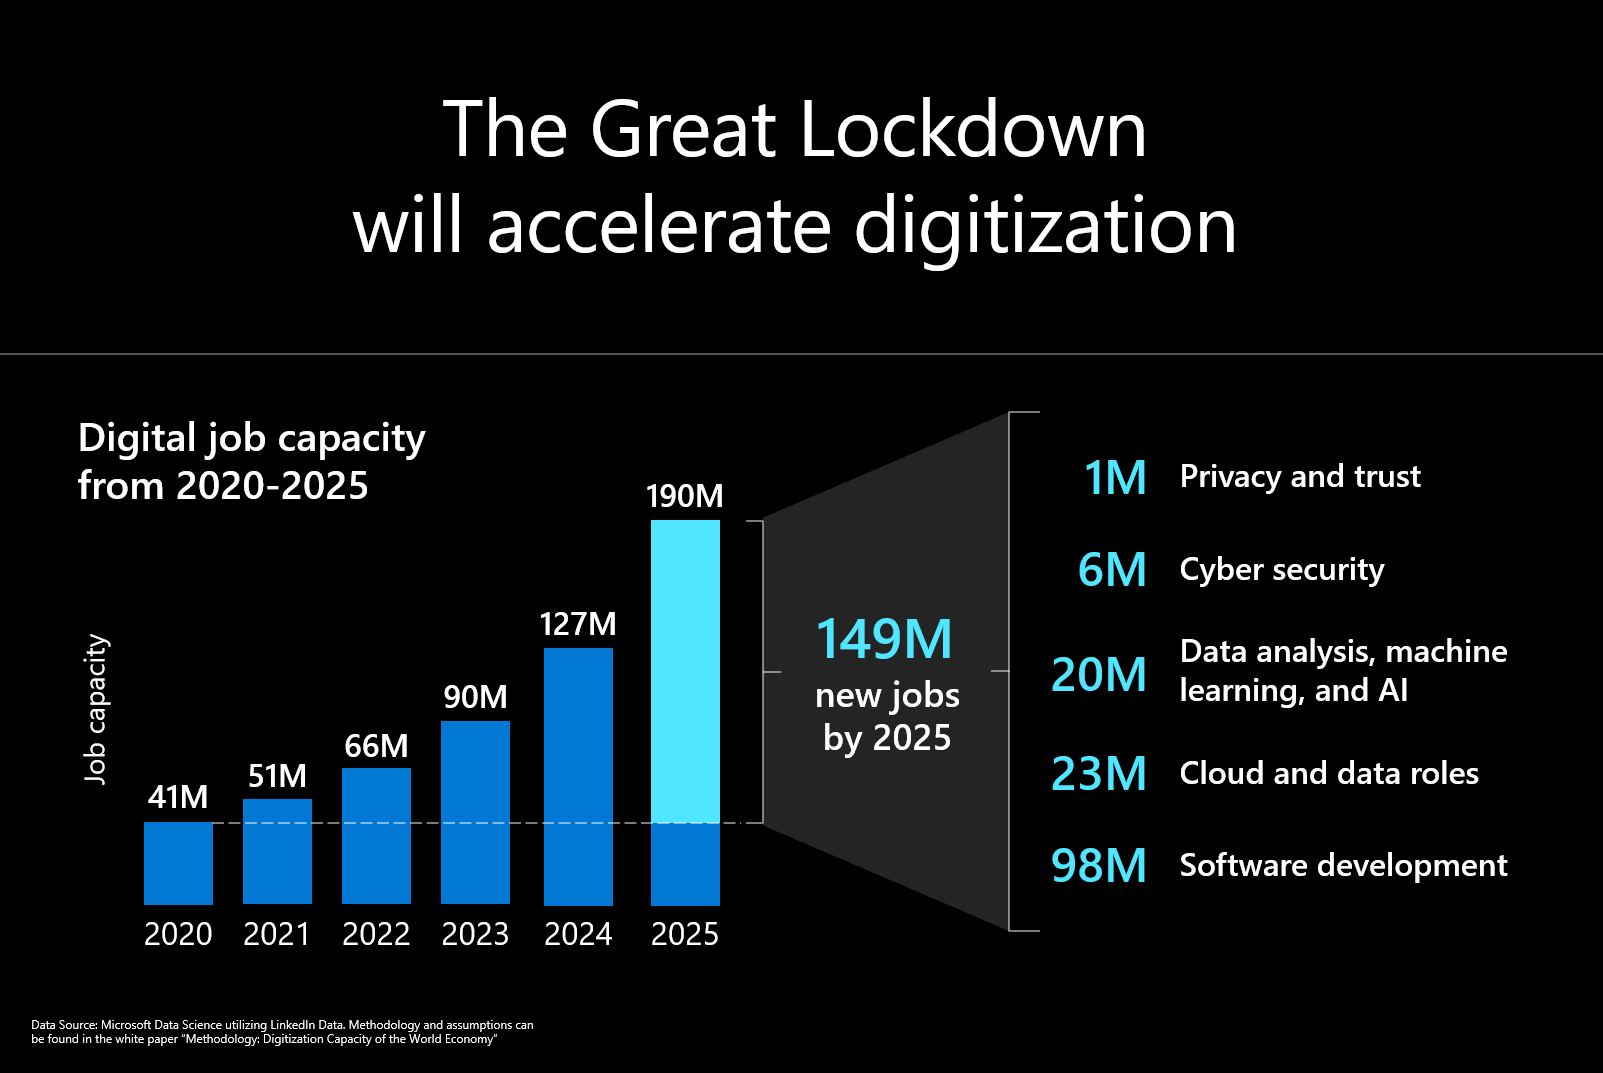 Lockdown will accelerate digitization